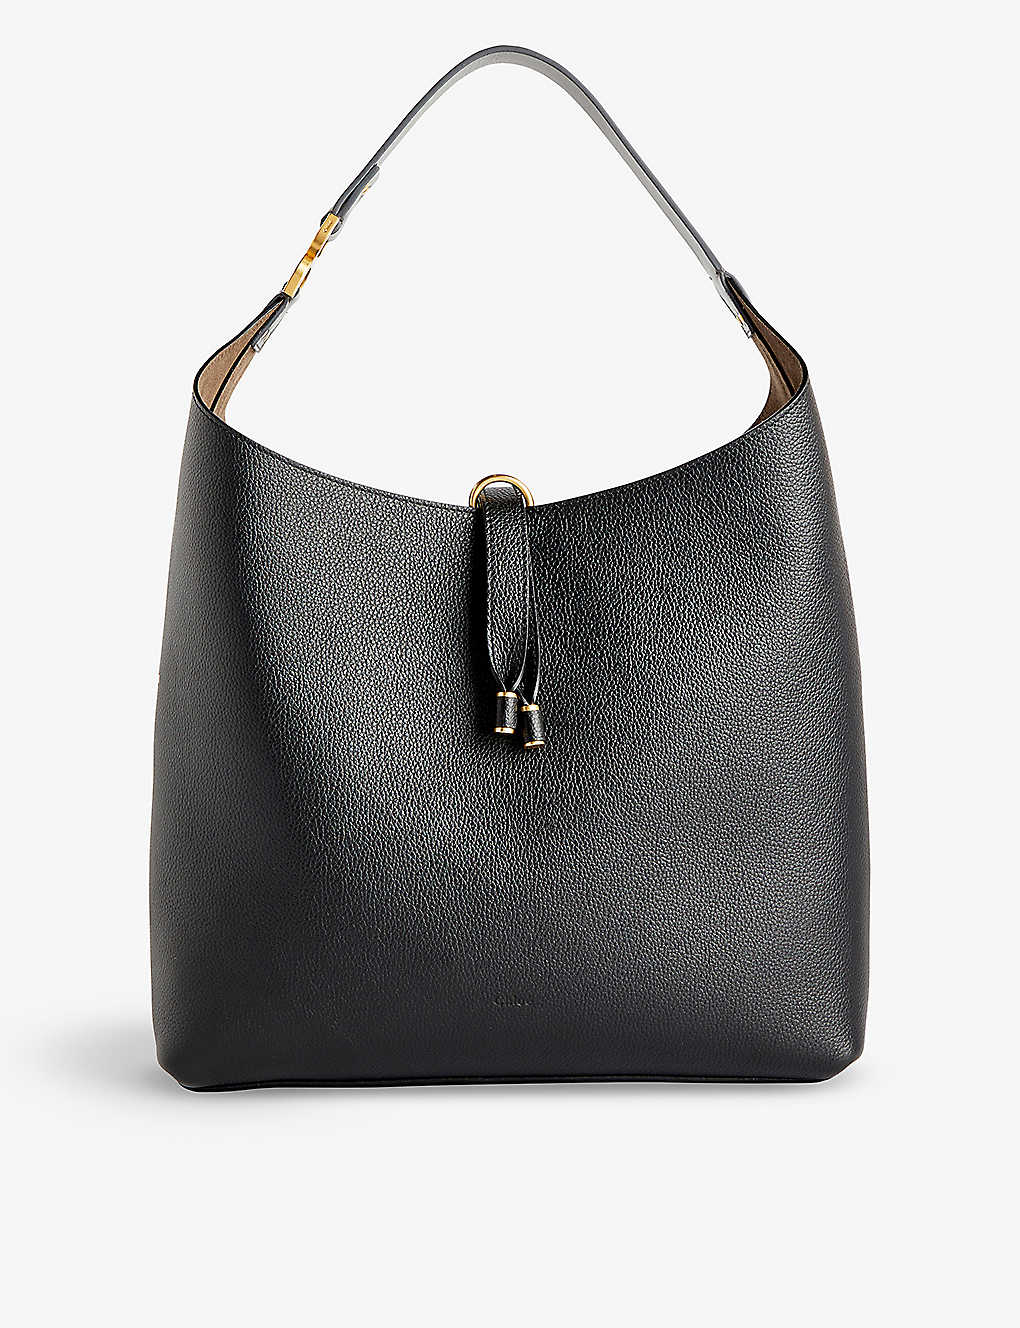 Chloé Chloe Womens Black Marcie Leather Hobo Bag